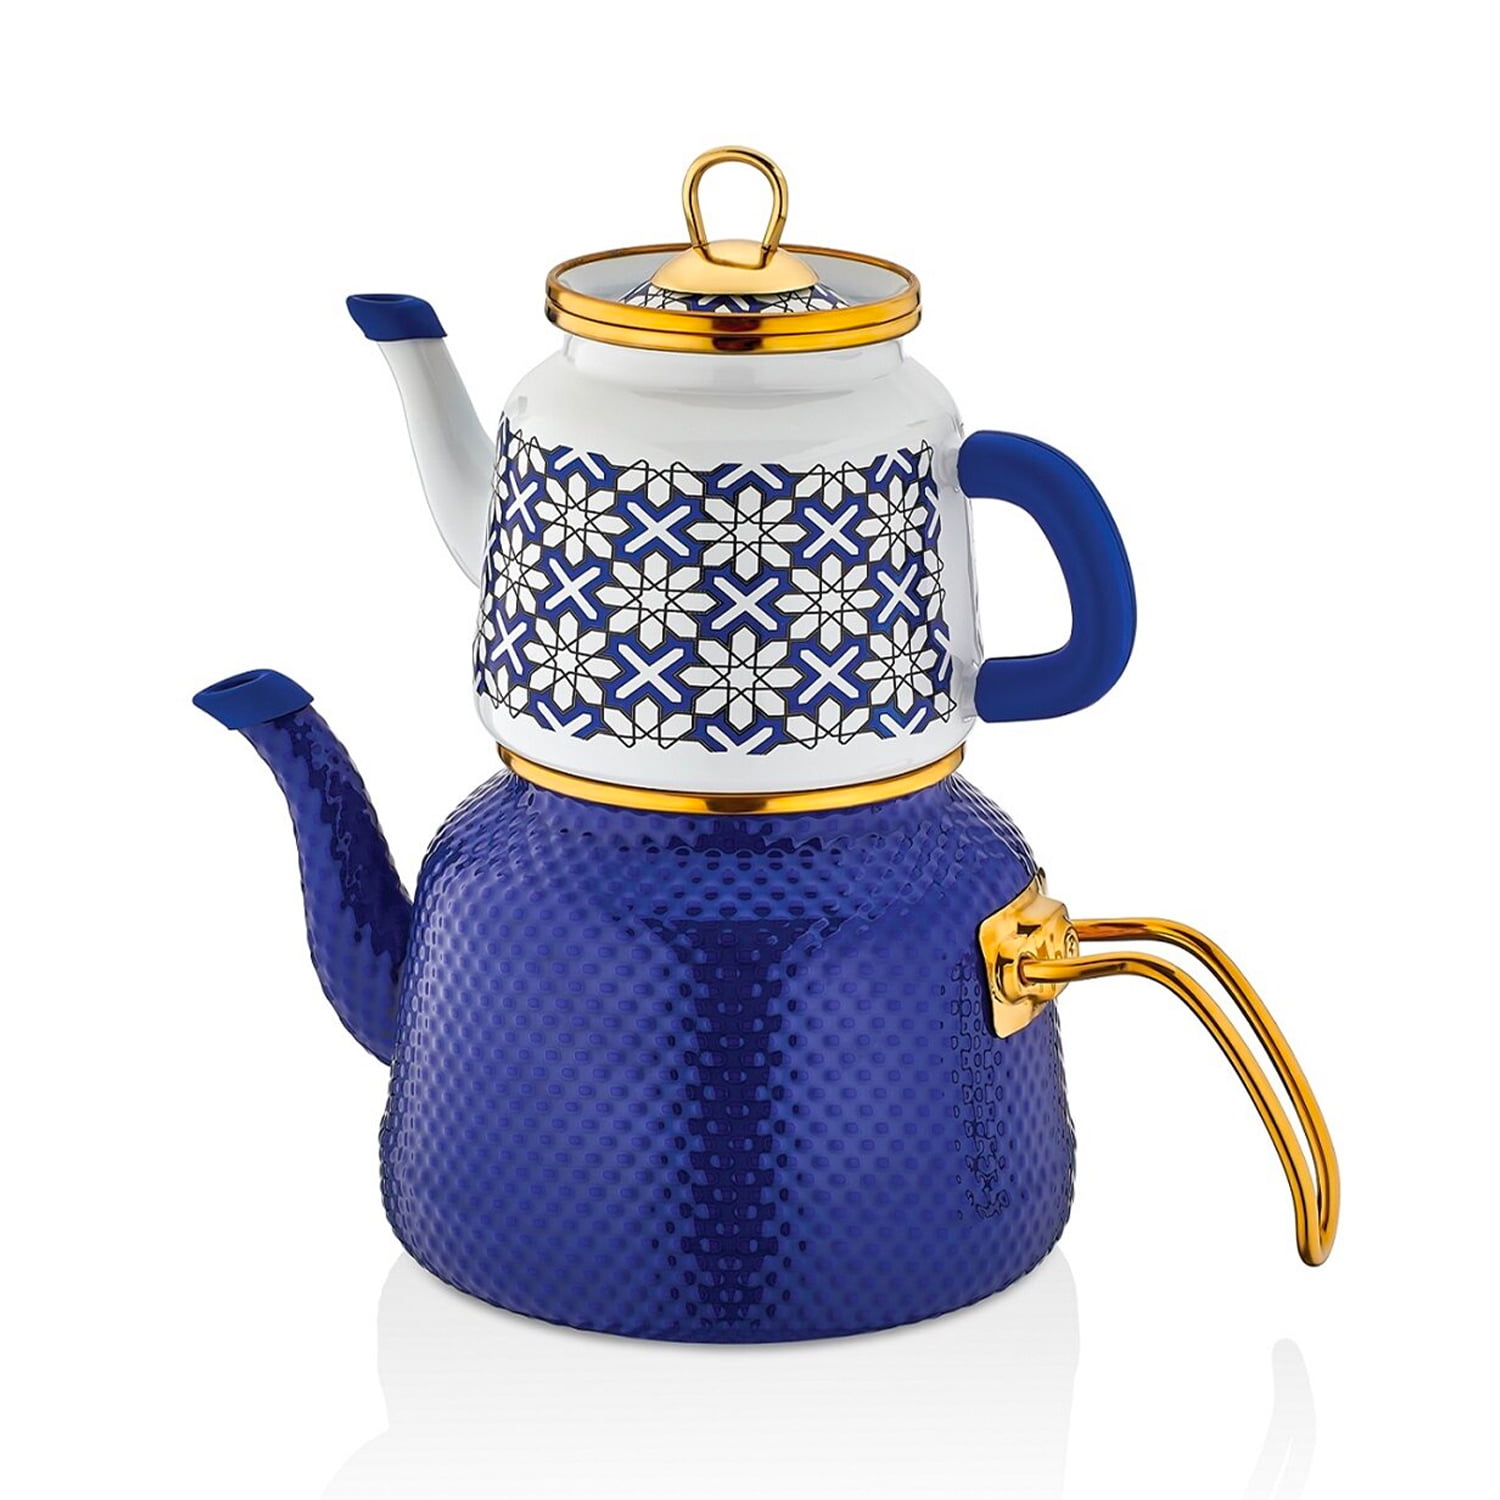 Vintage Small Blue Tea Kettle, Blue Enamelware, Tea Kettle